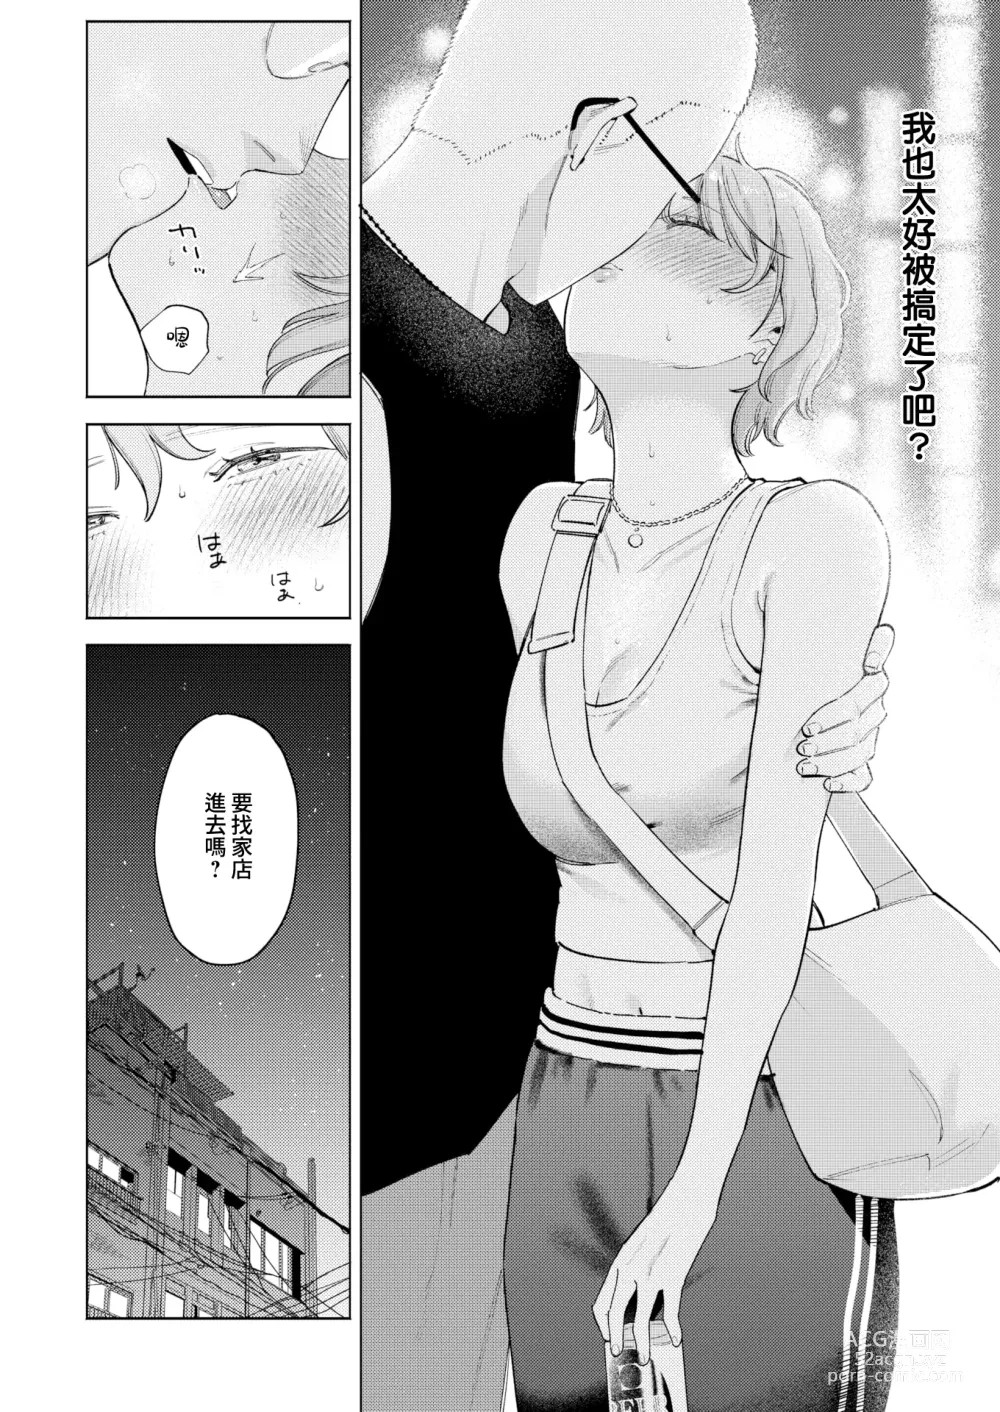 Page 12 of manga 搭錯紅線